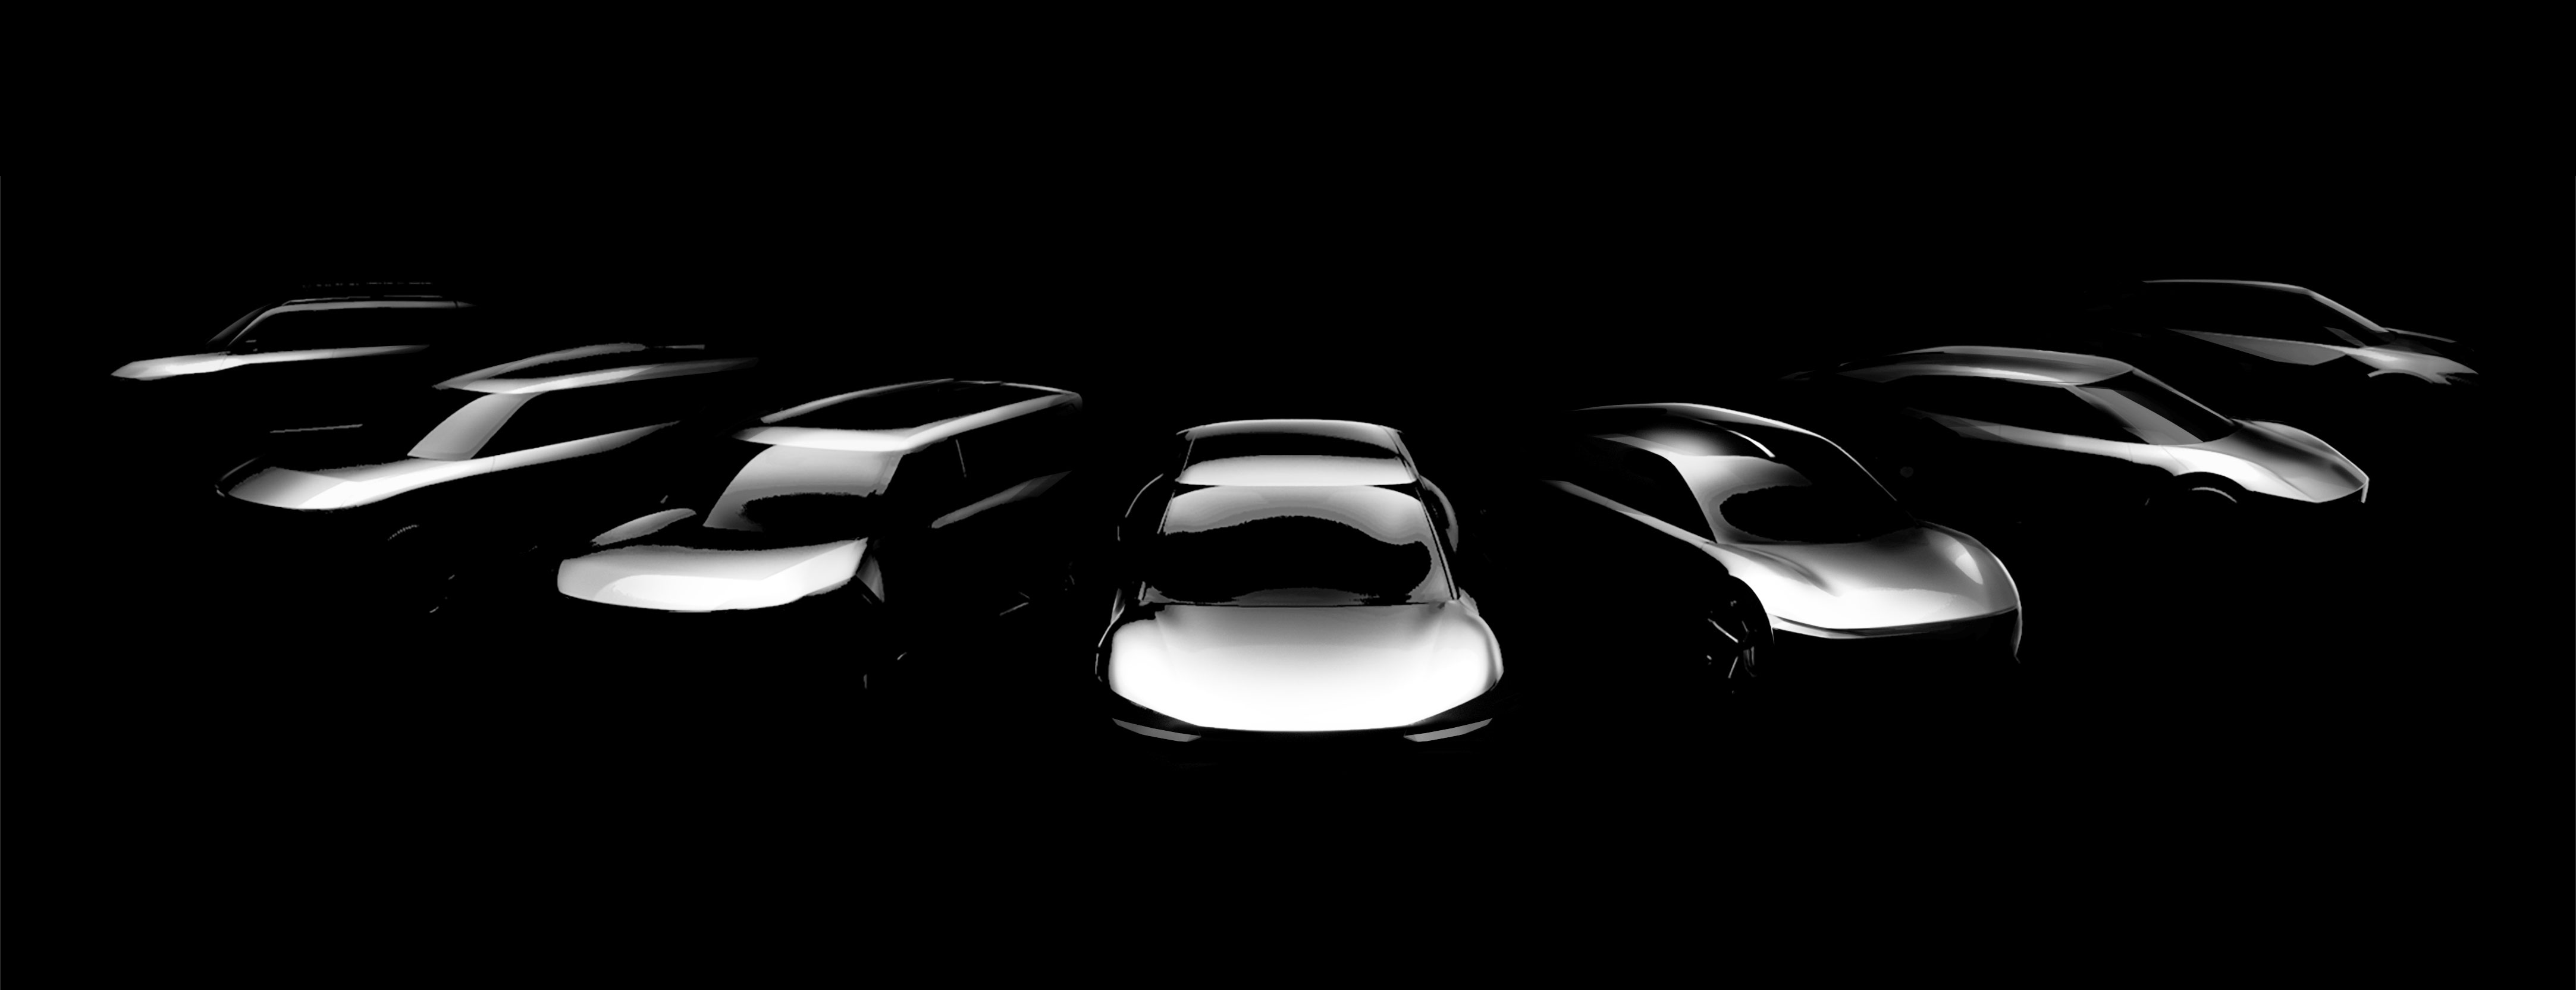 Hyundai-Elektroautos-Teaser-2020-1